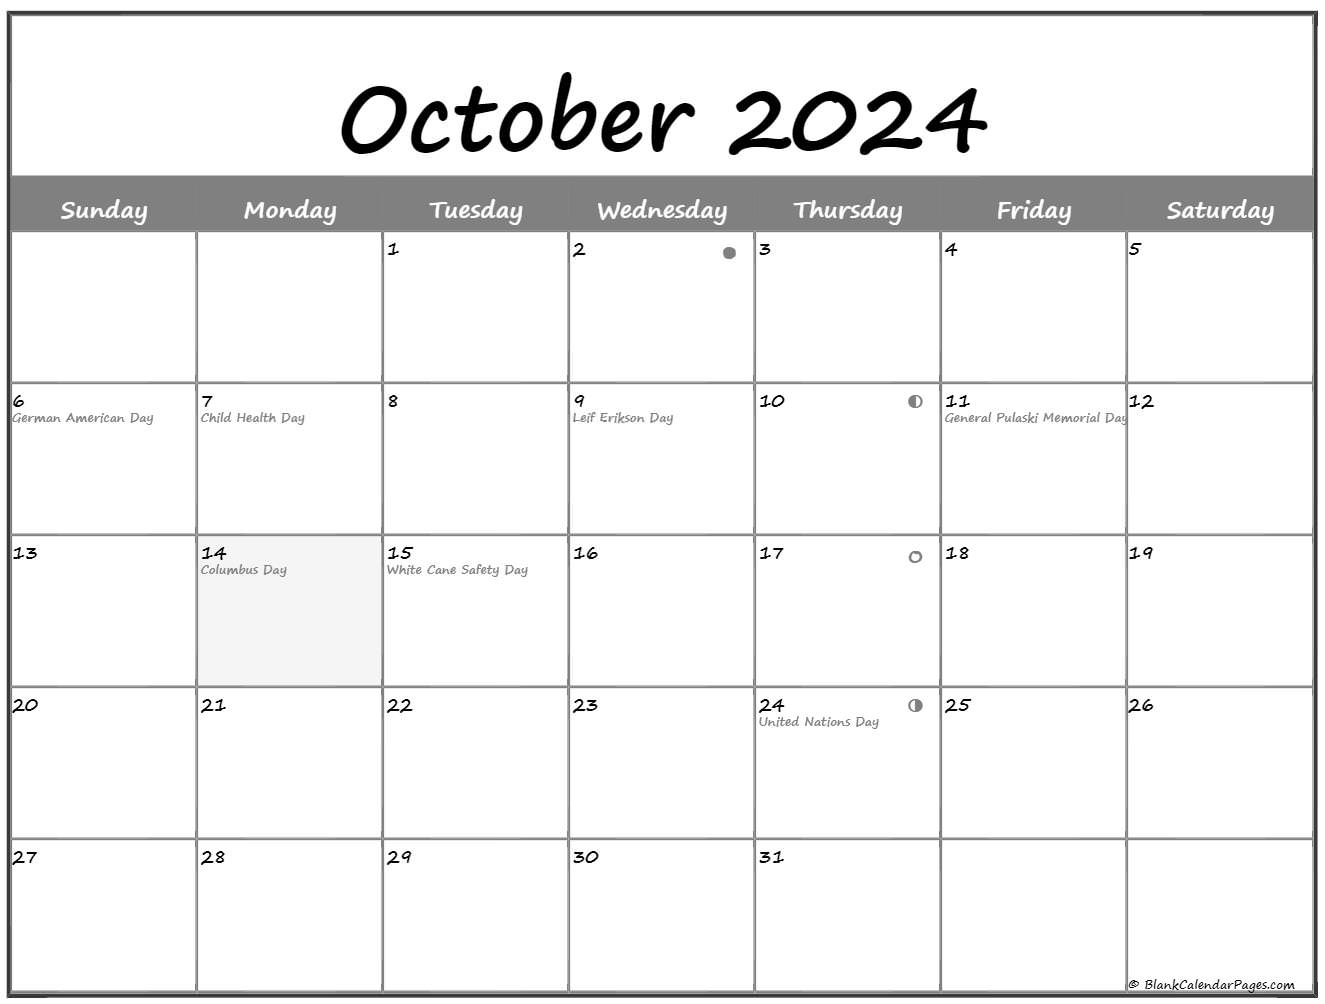 October 2018 Lunar Calendar Moon Phase Calendar